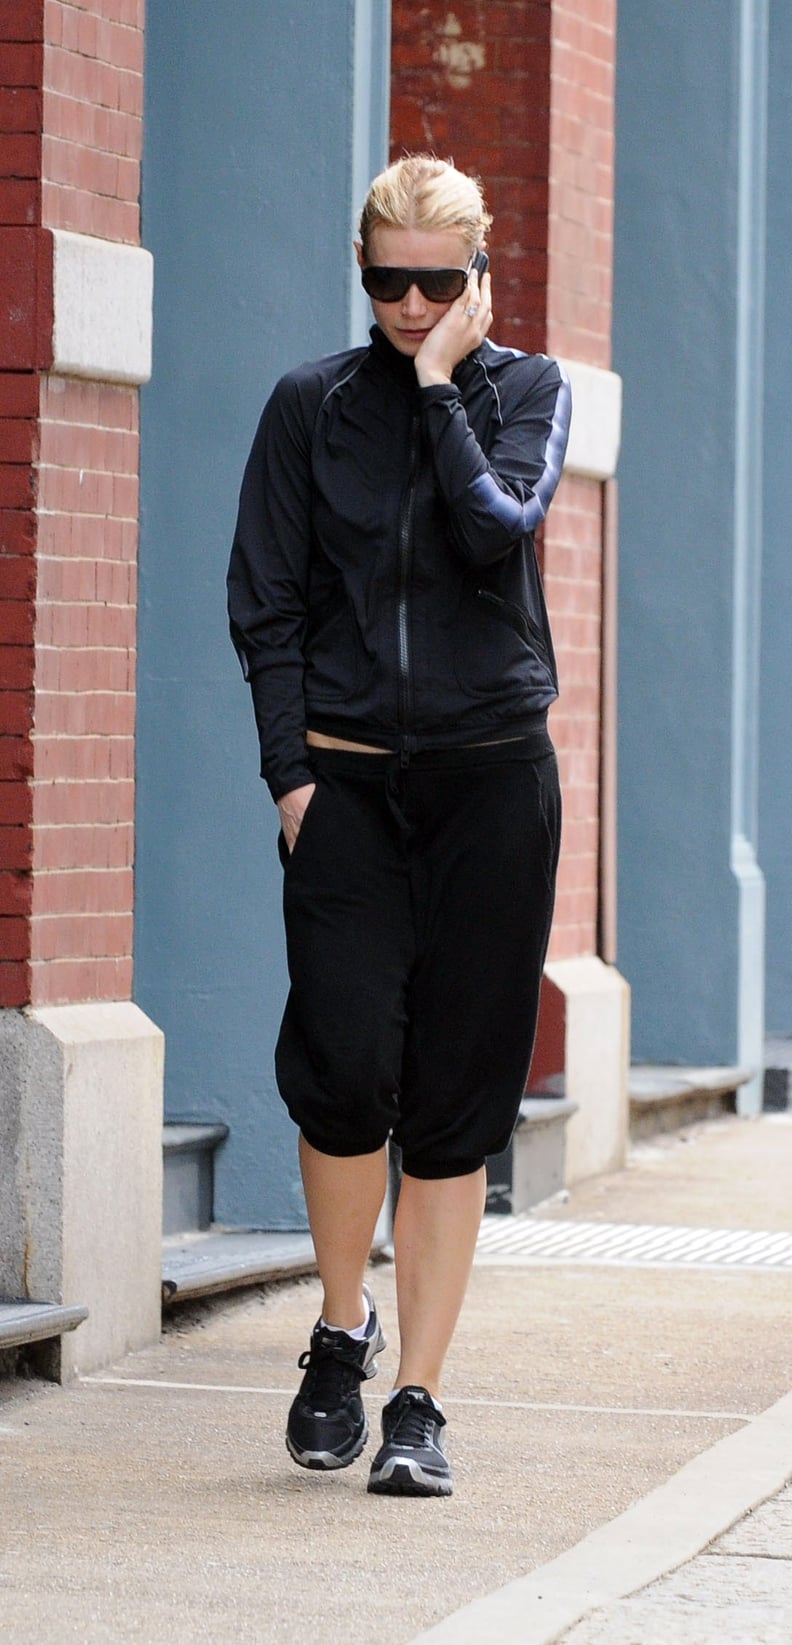 Gwyneth Paltrow Wearing a Black Sports Jacket and Shorts